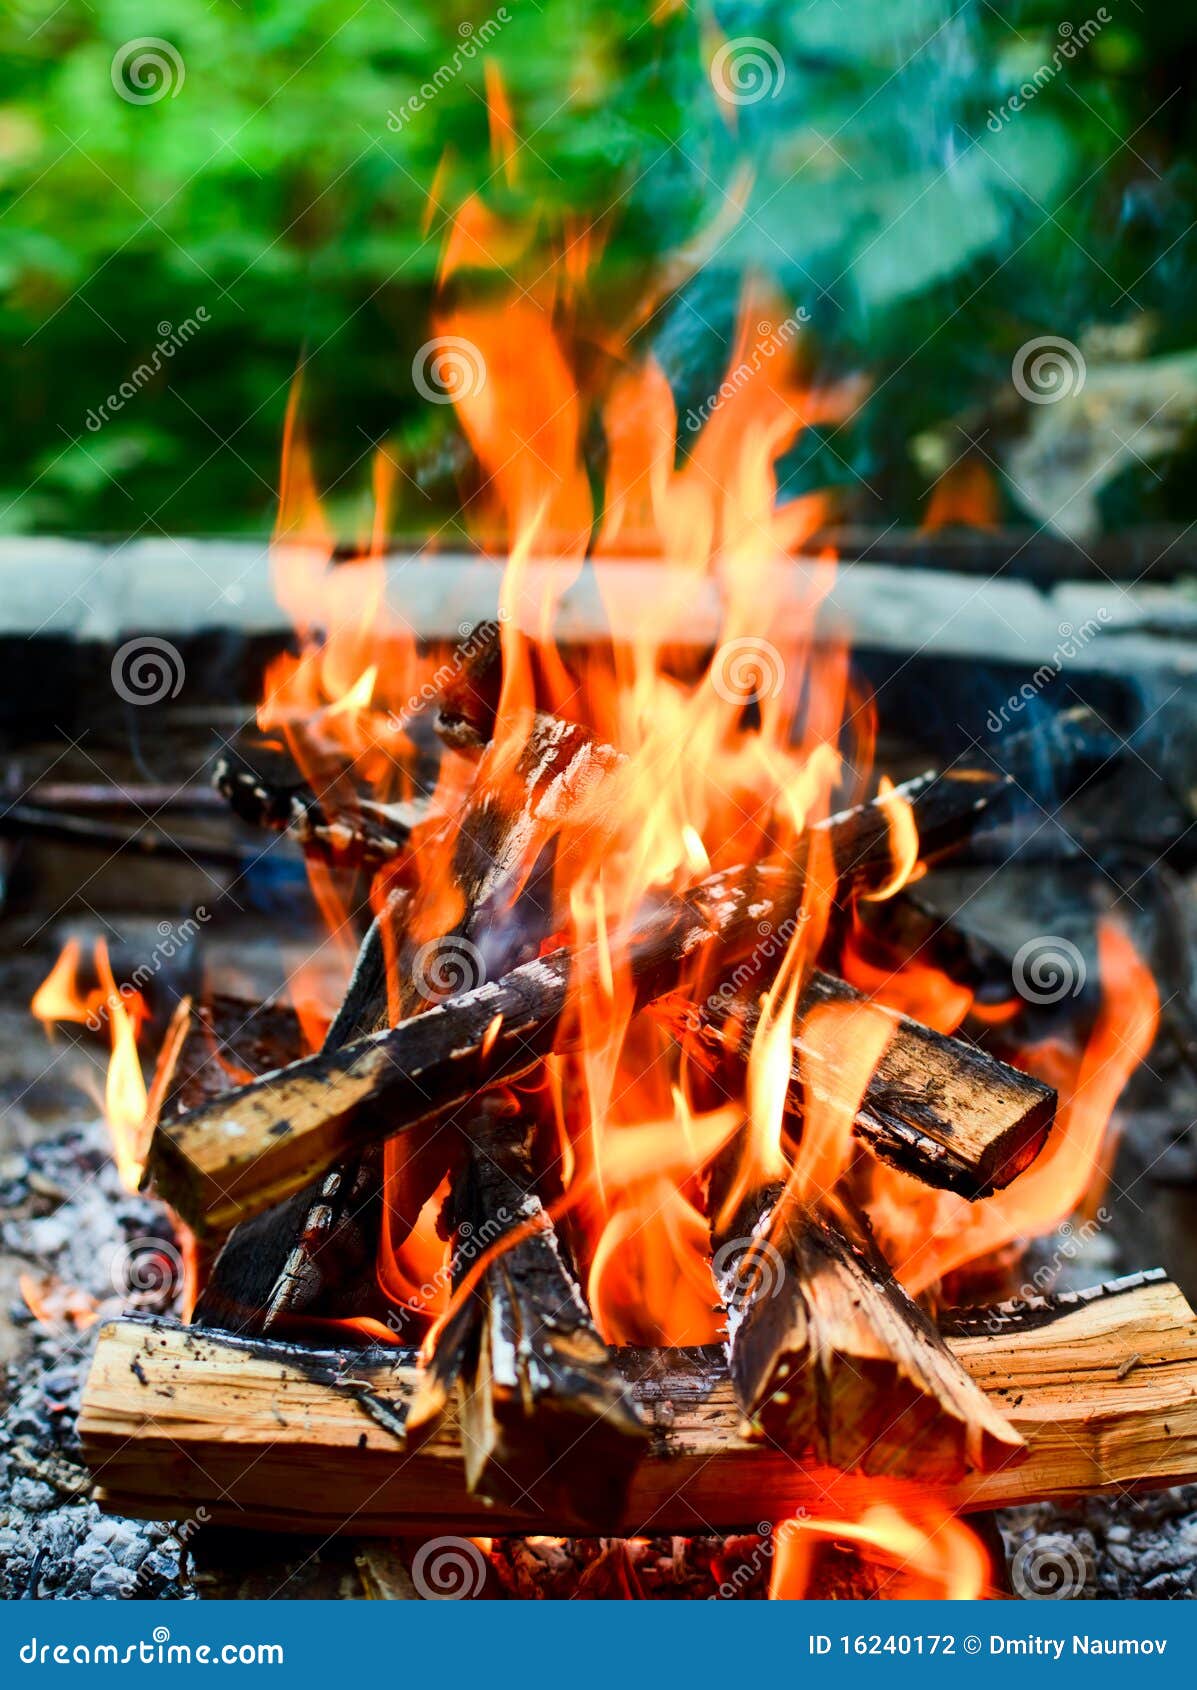 Camfire stock photo. Image of ablaze, outdoor, nature - 16240172